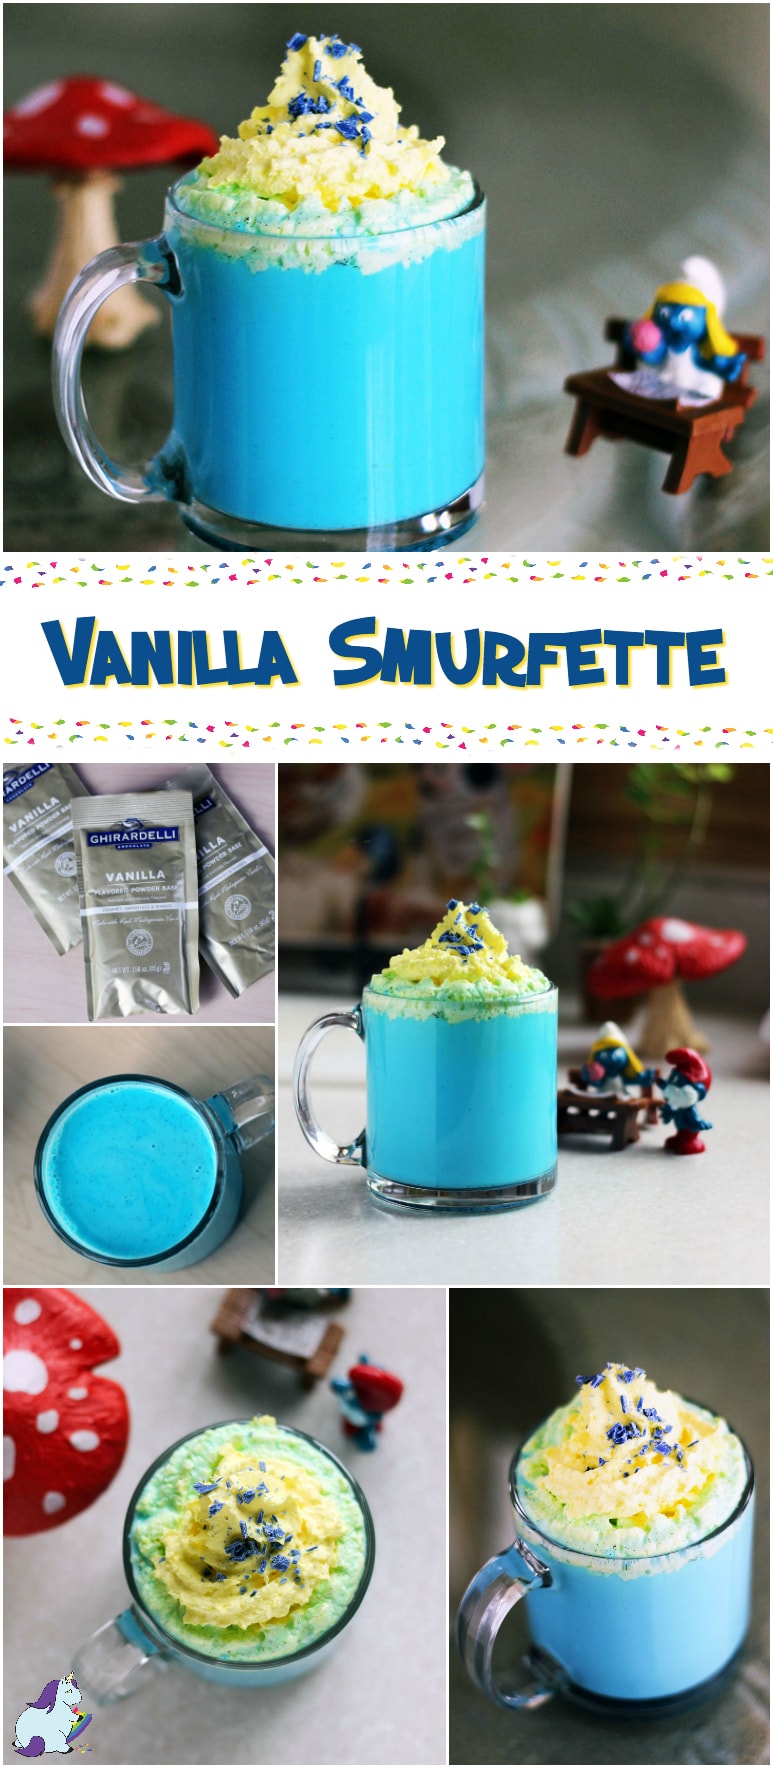 Vanilla Smurfette Blue Drink Recipe to celebrate the SMURFS new movie